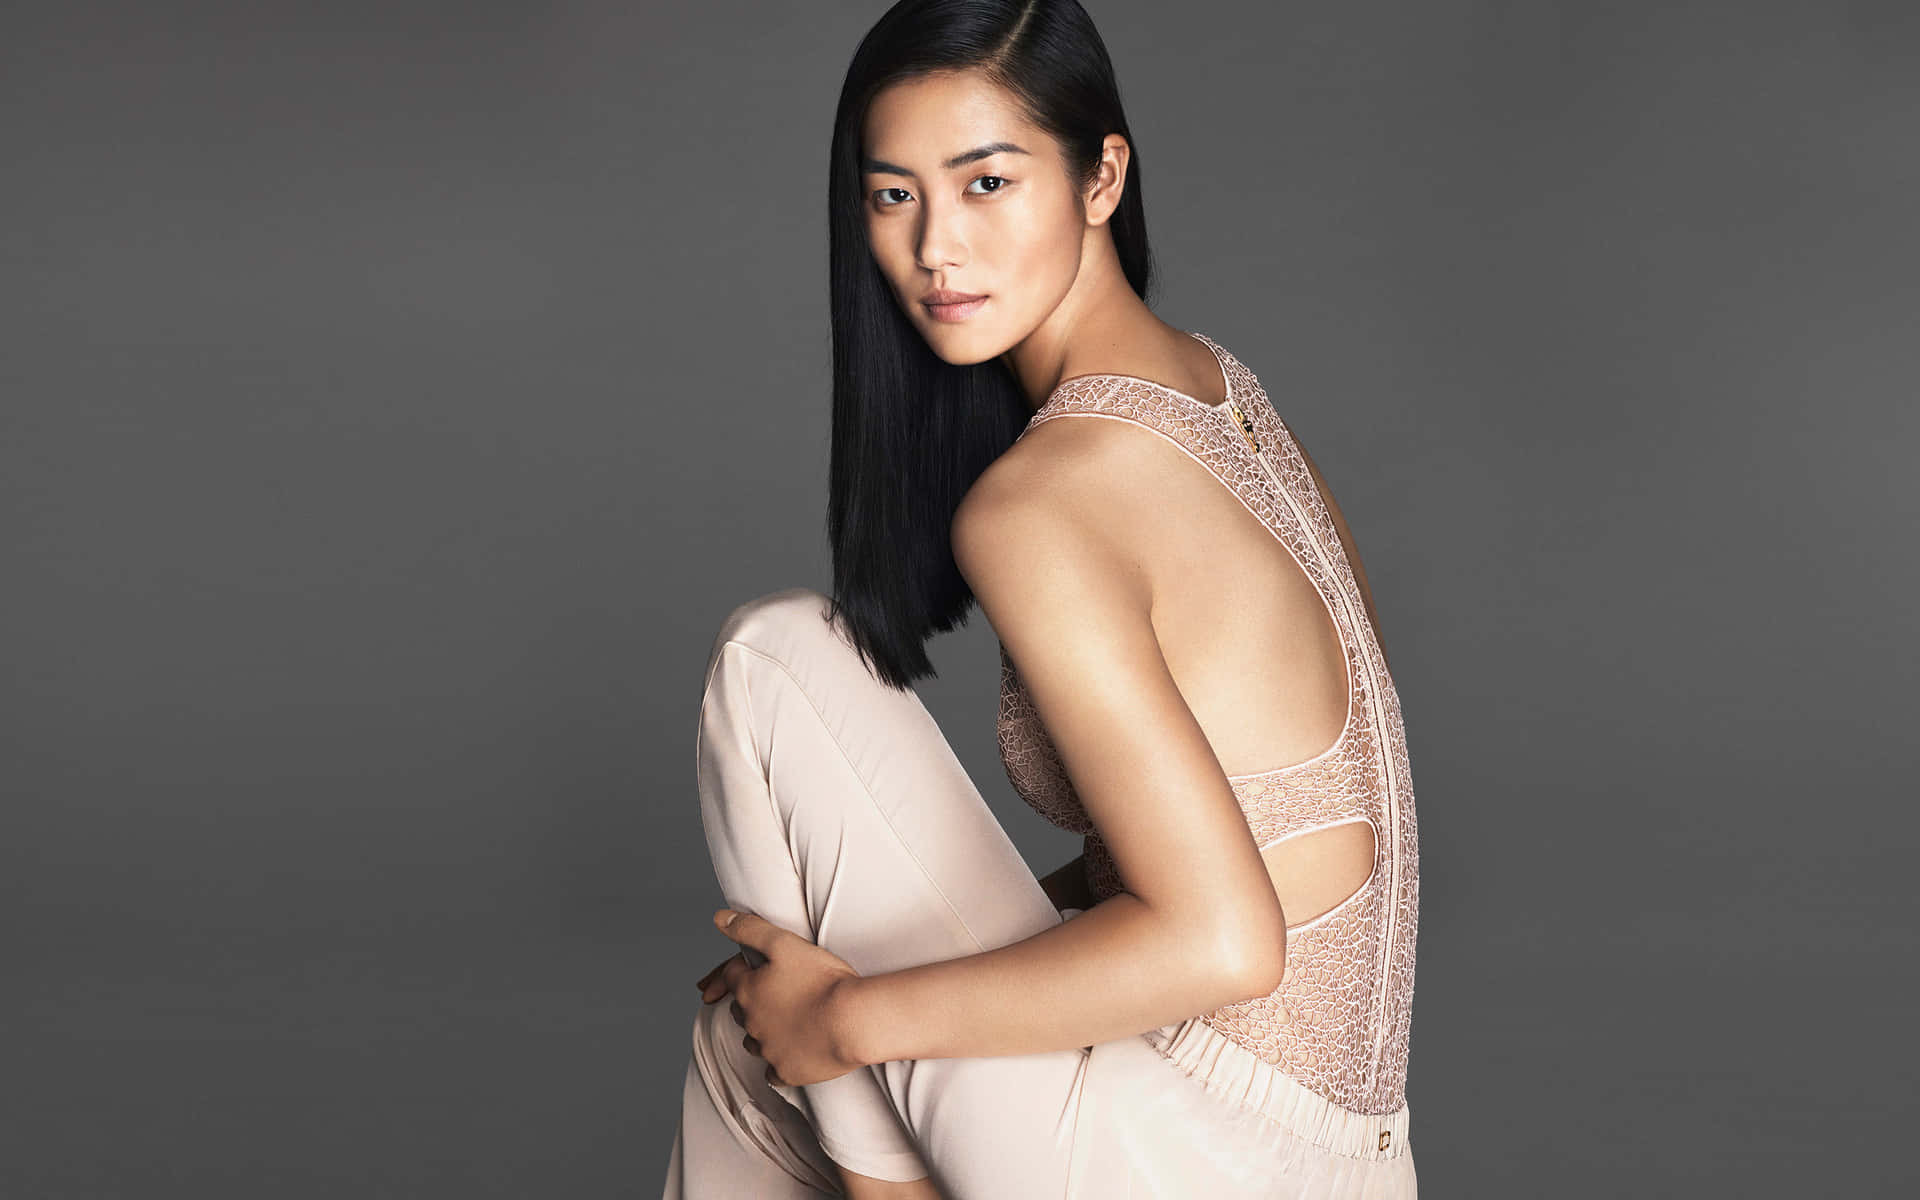 Liu Wen, International Supermodel, Striking A Pose During A Photo Shoot. Background